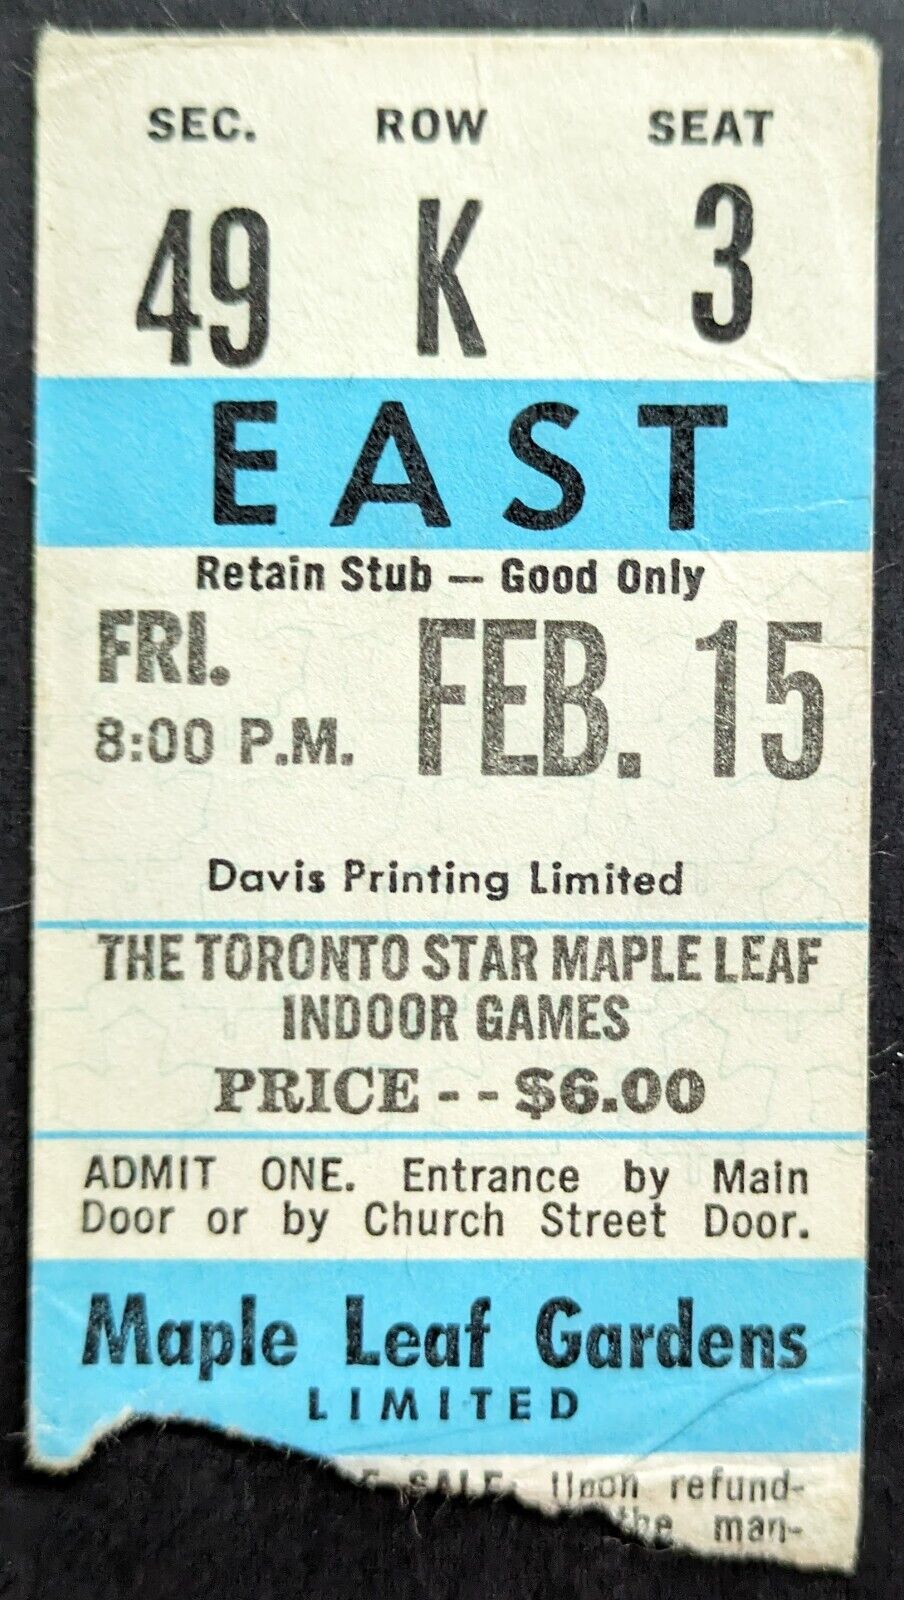 1974 Maple Leaf Gardens Ticket Stub Toronto Star Maple Leaf Indoor Games Used